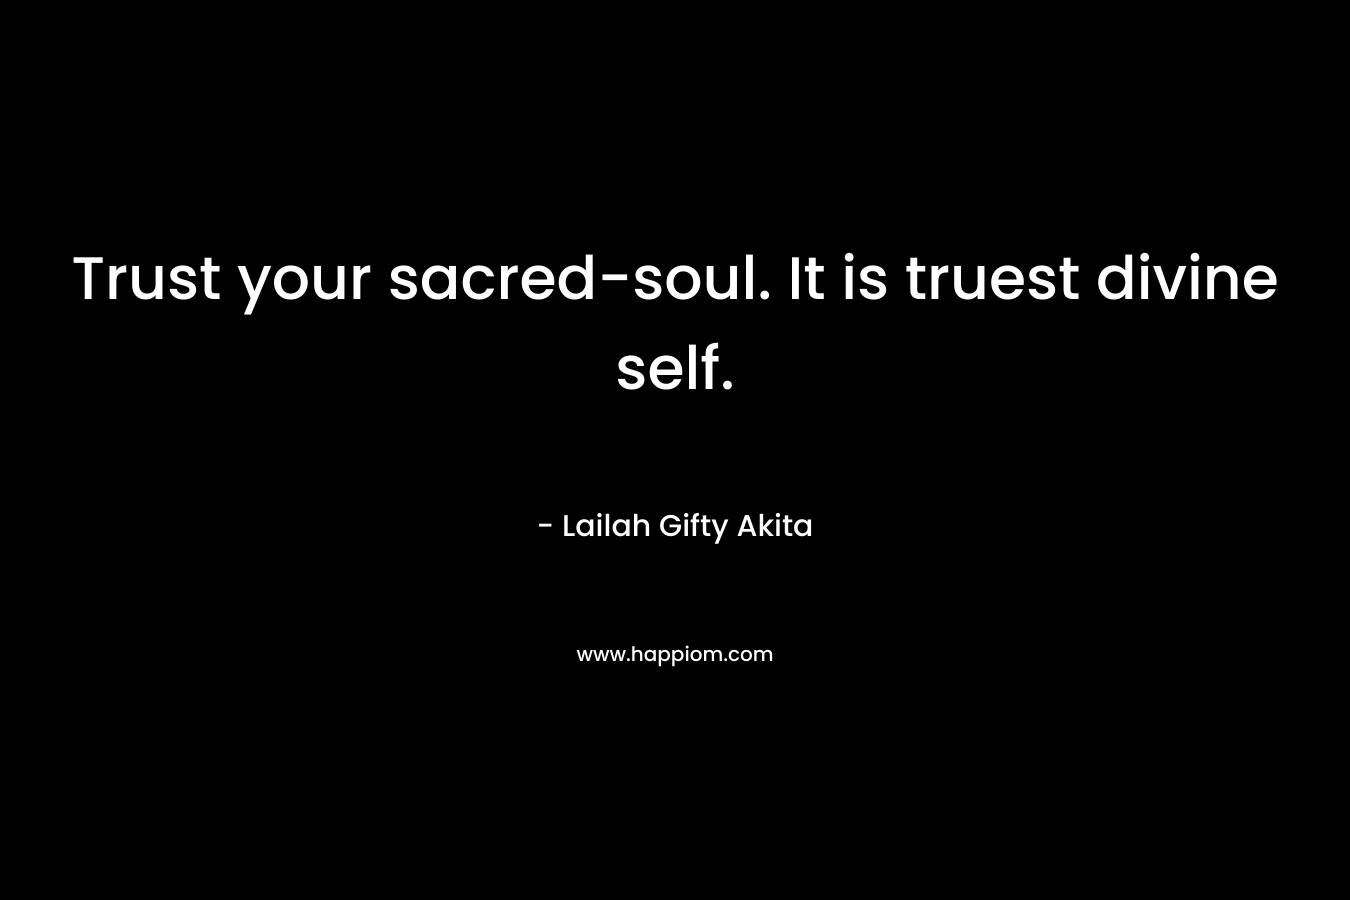 Trust your sacred-soul. It is truest divine self.